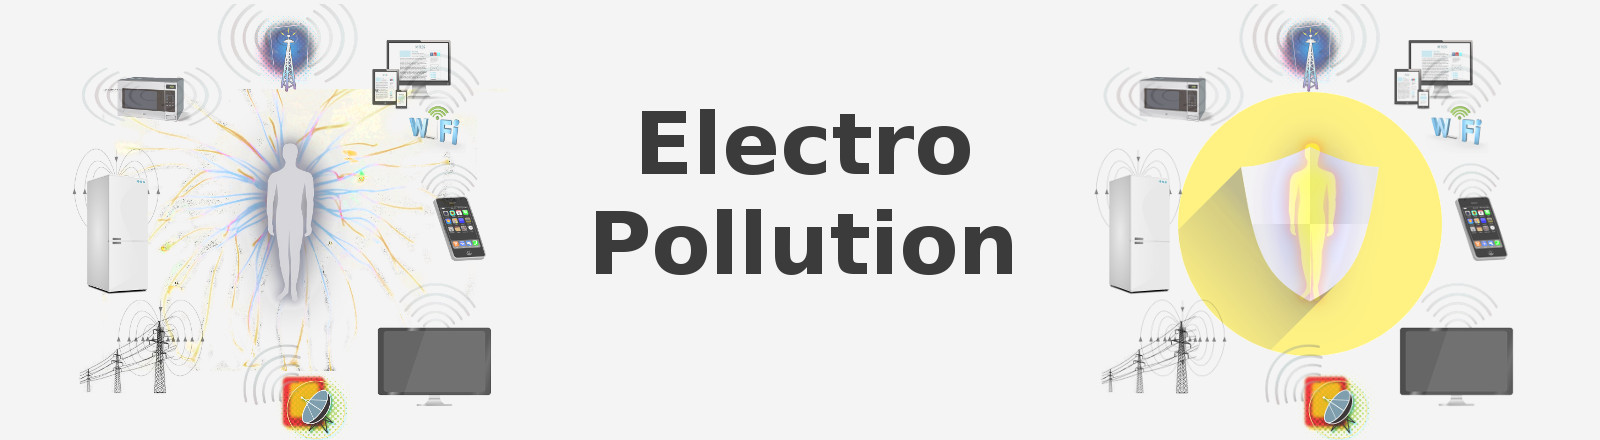 EMF Electro Pollution